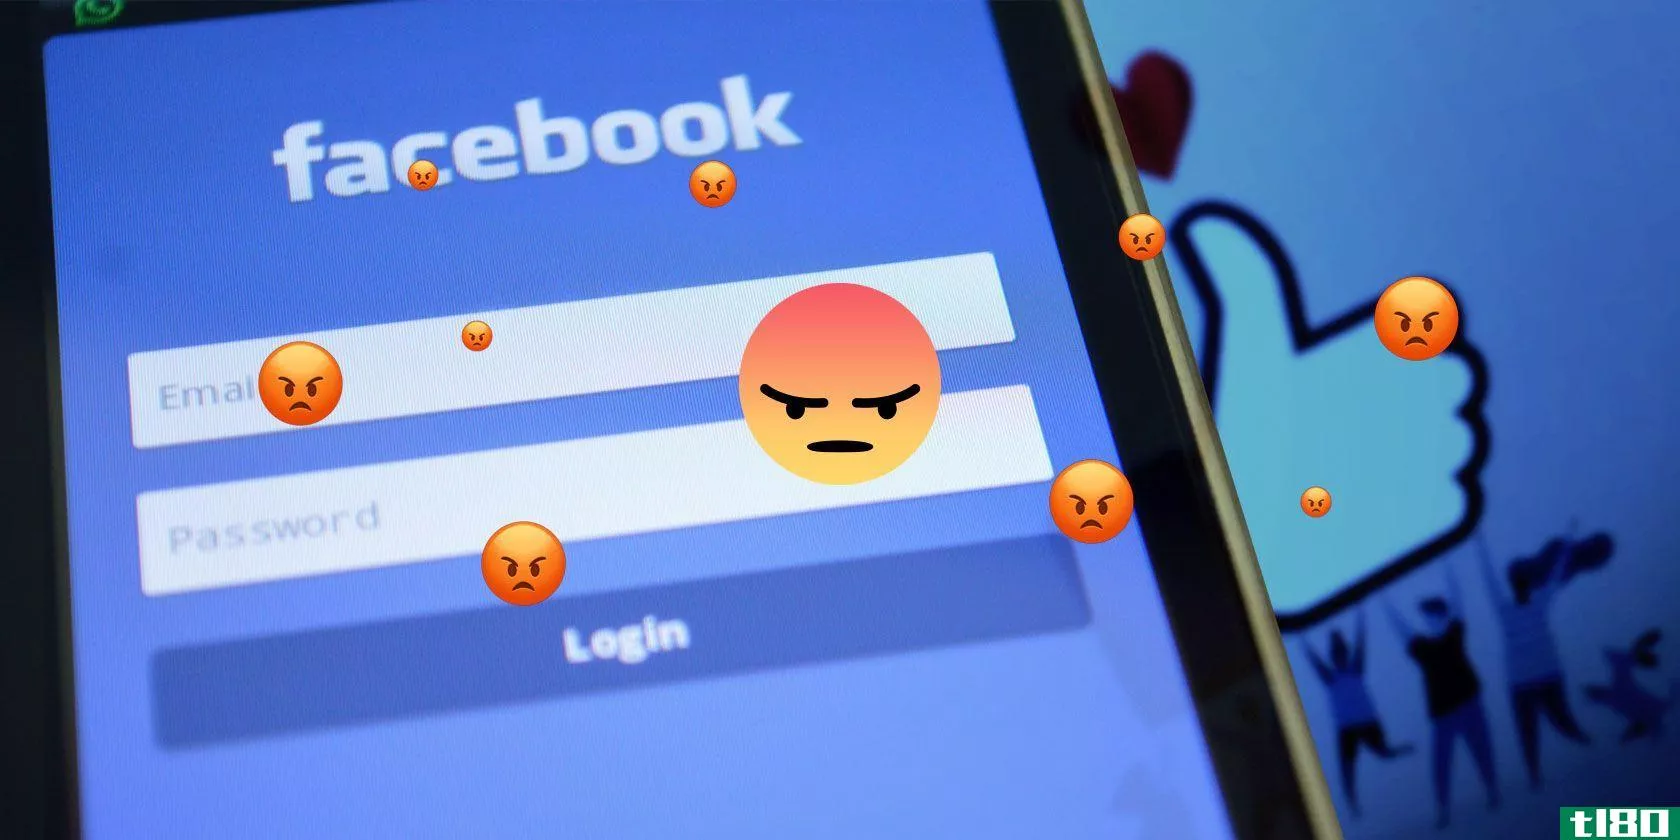 facebook-restricti***-annoyances